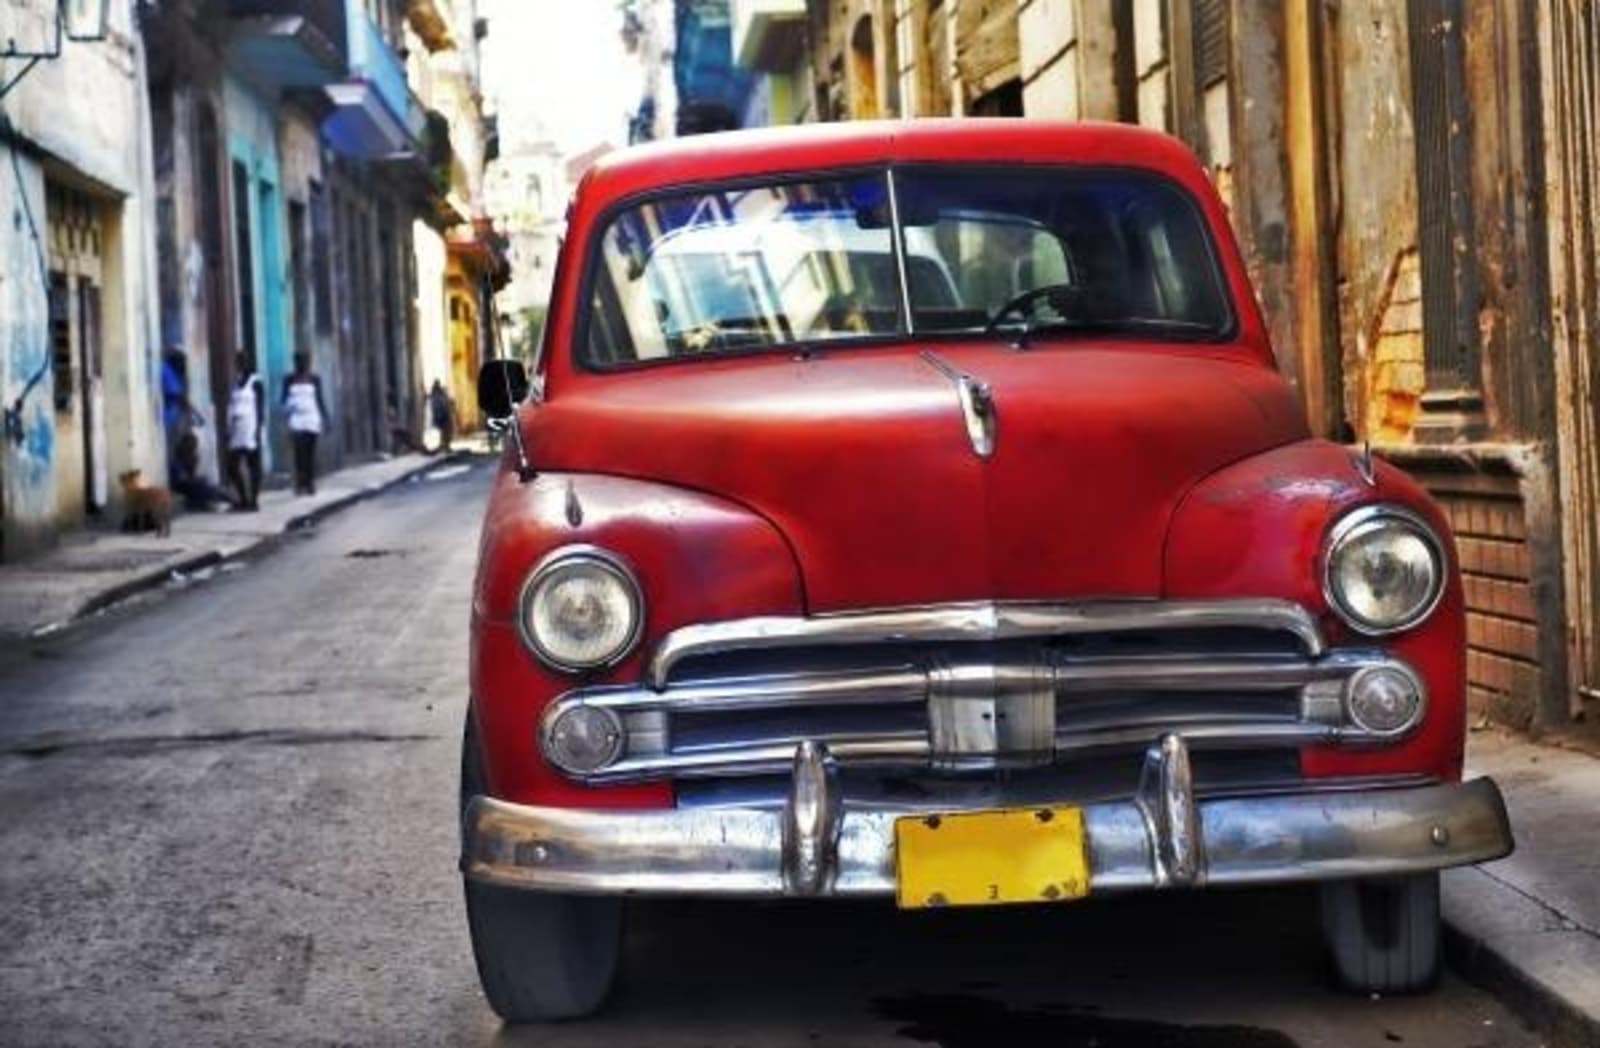 classic-vintage-american-car-parked-the-street-old-havana-cuba36261394.jpg